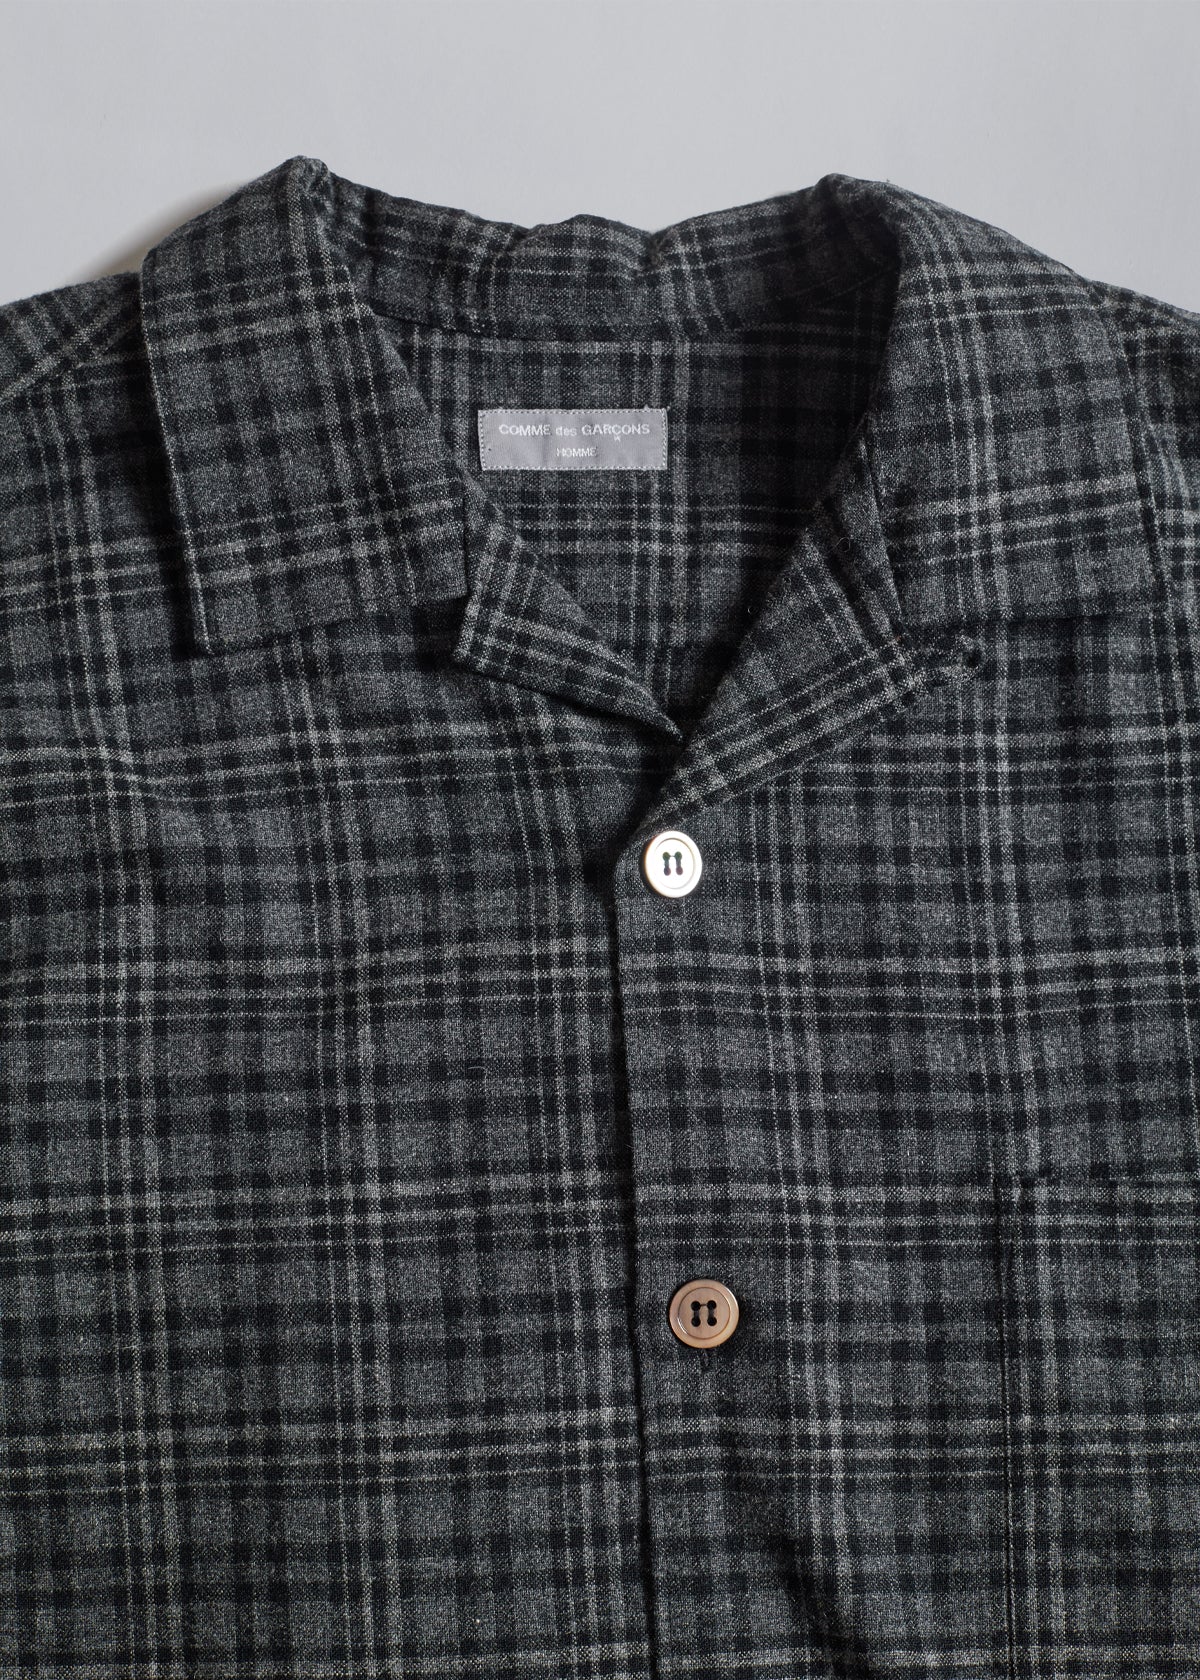 Homme Wool Checkered Shirt 2002 - Medium - The Archivist Store